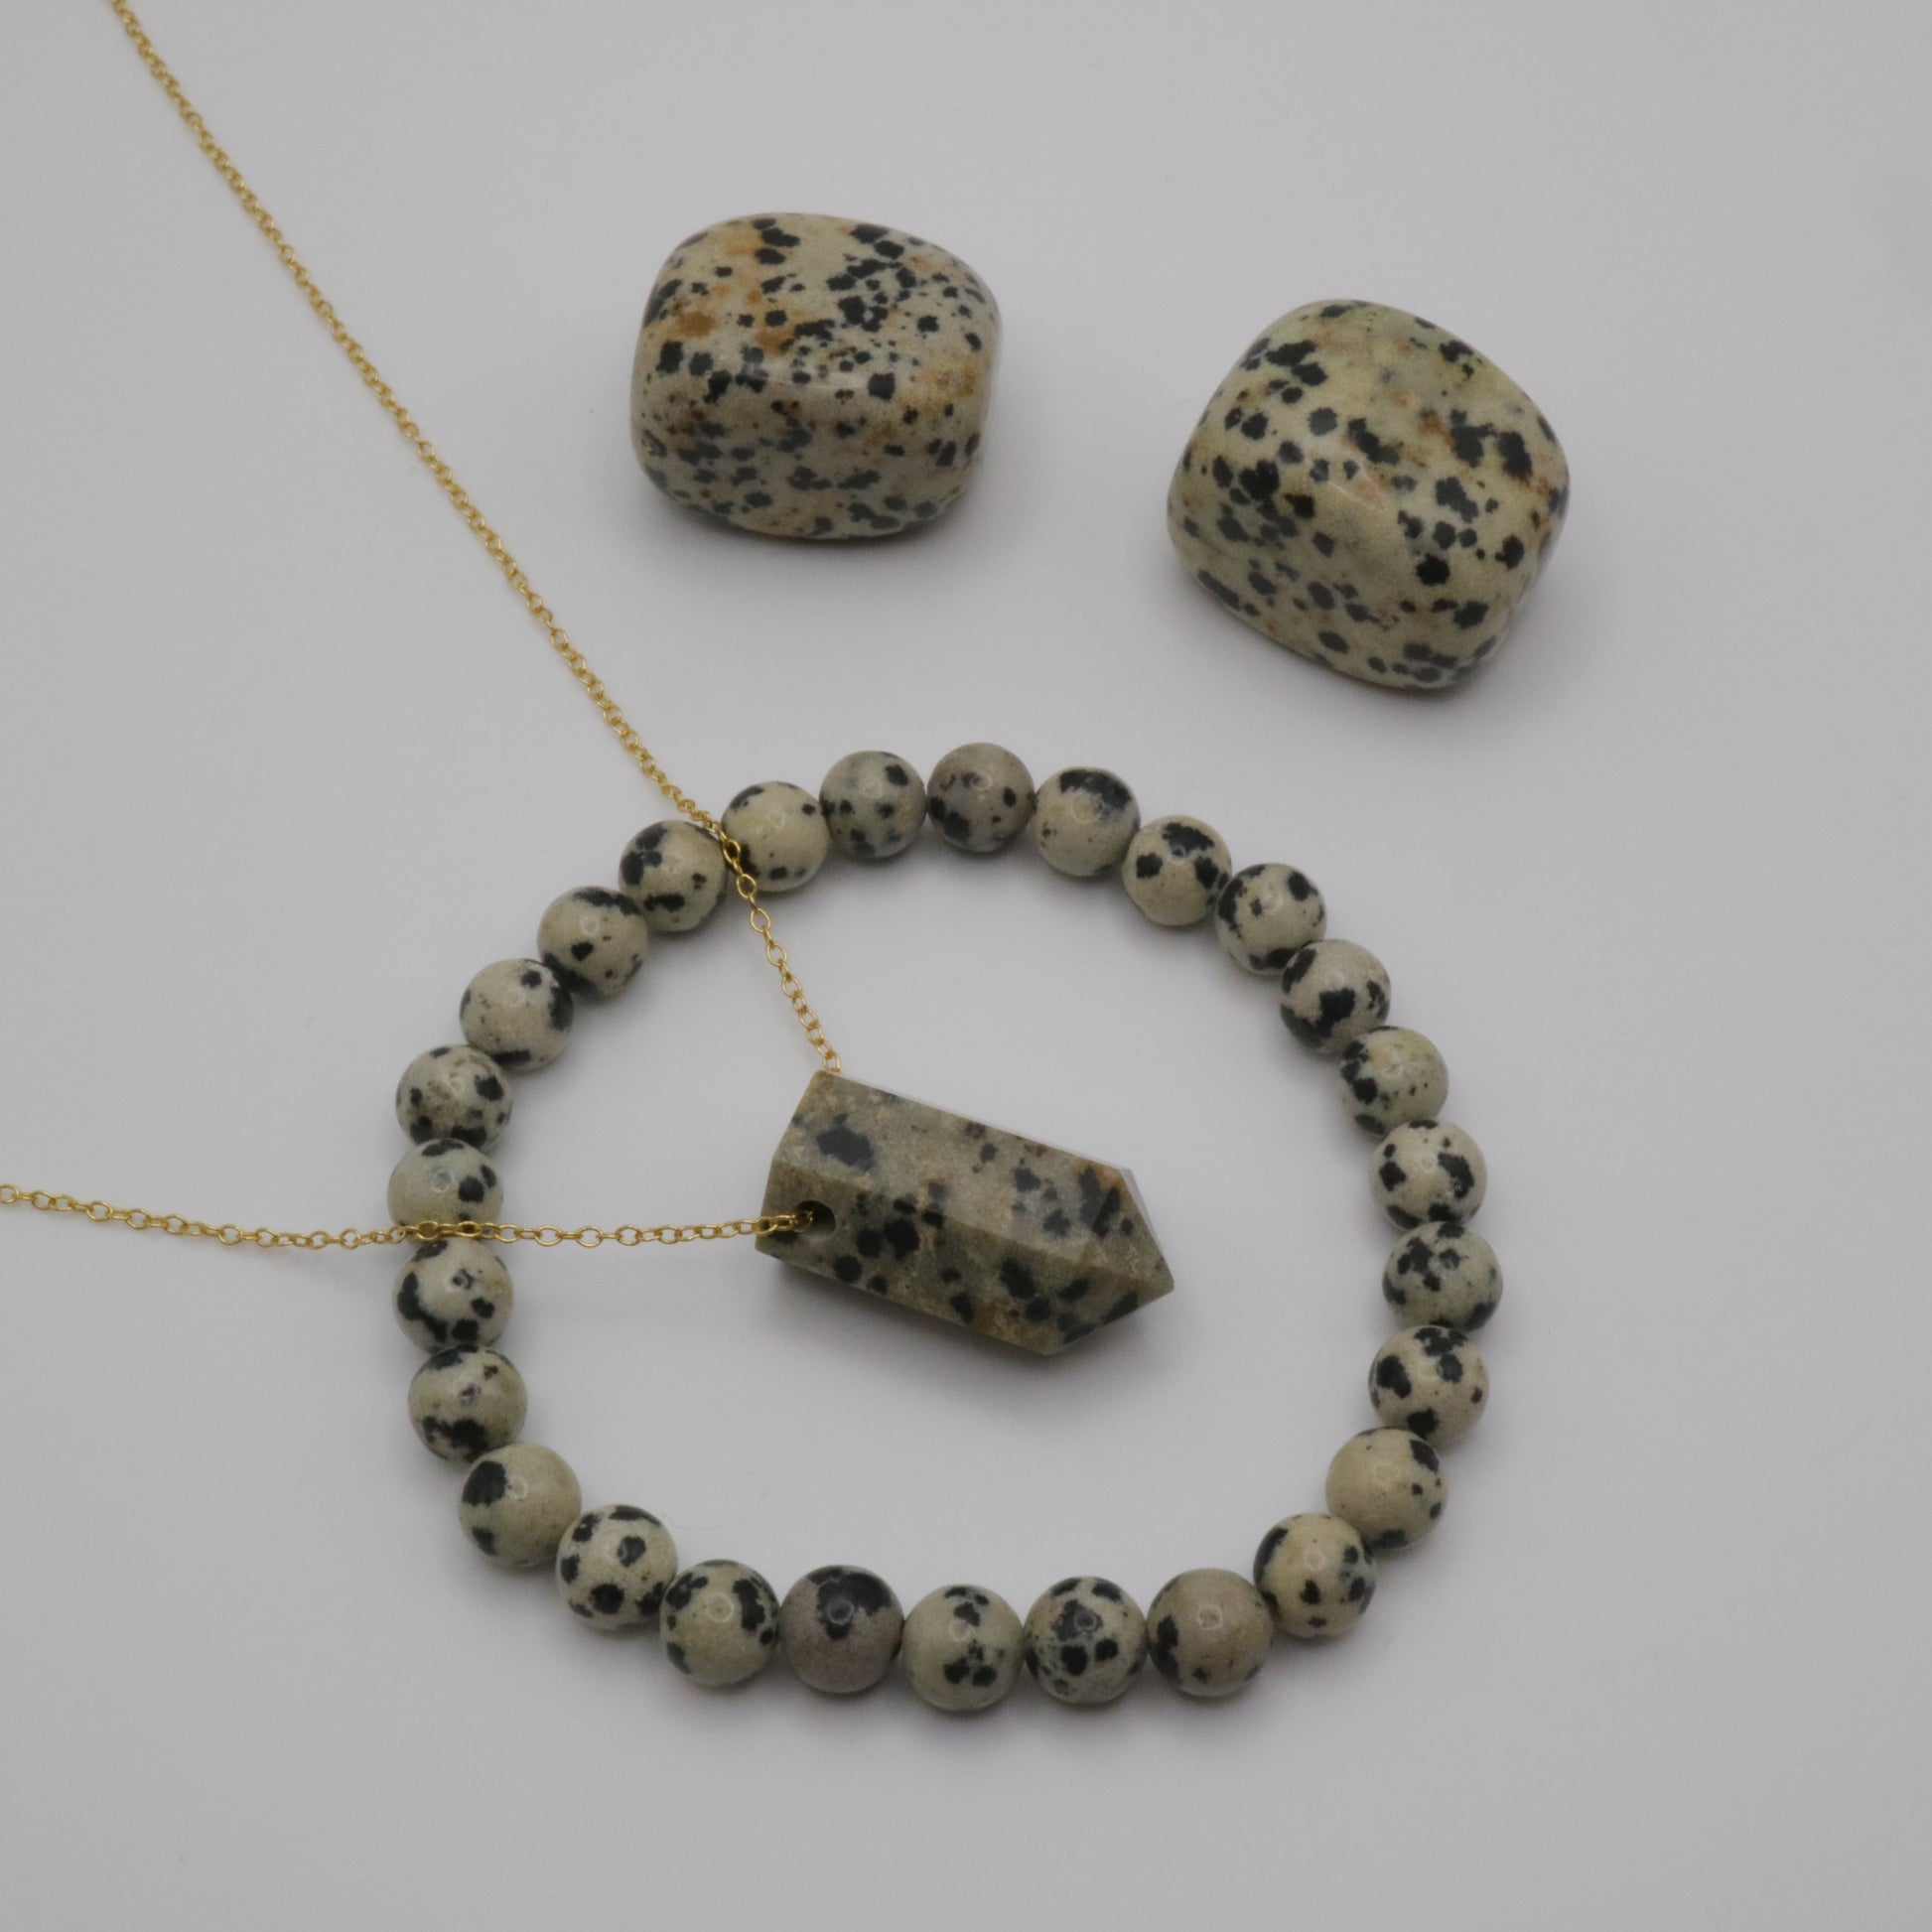 Dalmatian Jasper Crystal on a fine gold chain surrounded by a Dalmatian Jasper crystal bracelet and two Dalmatian Jasper tumblestone crystals 